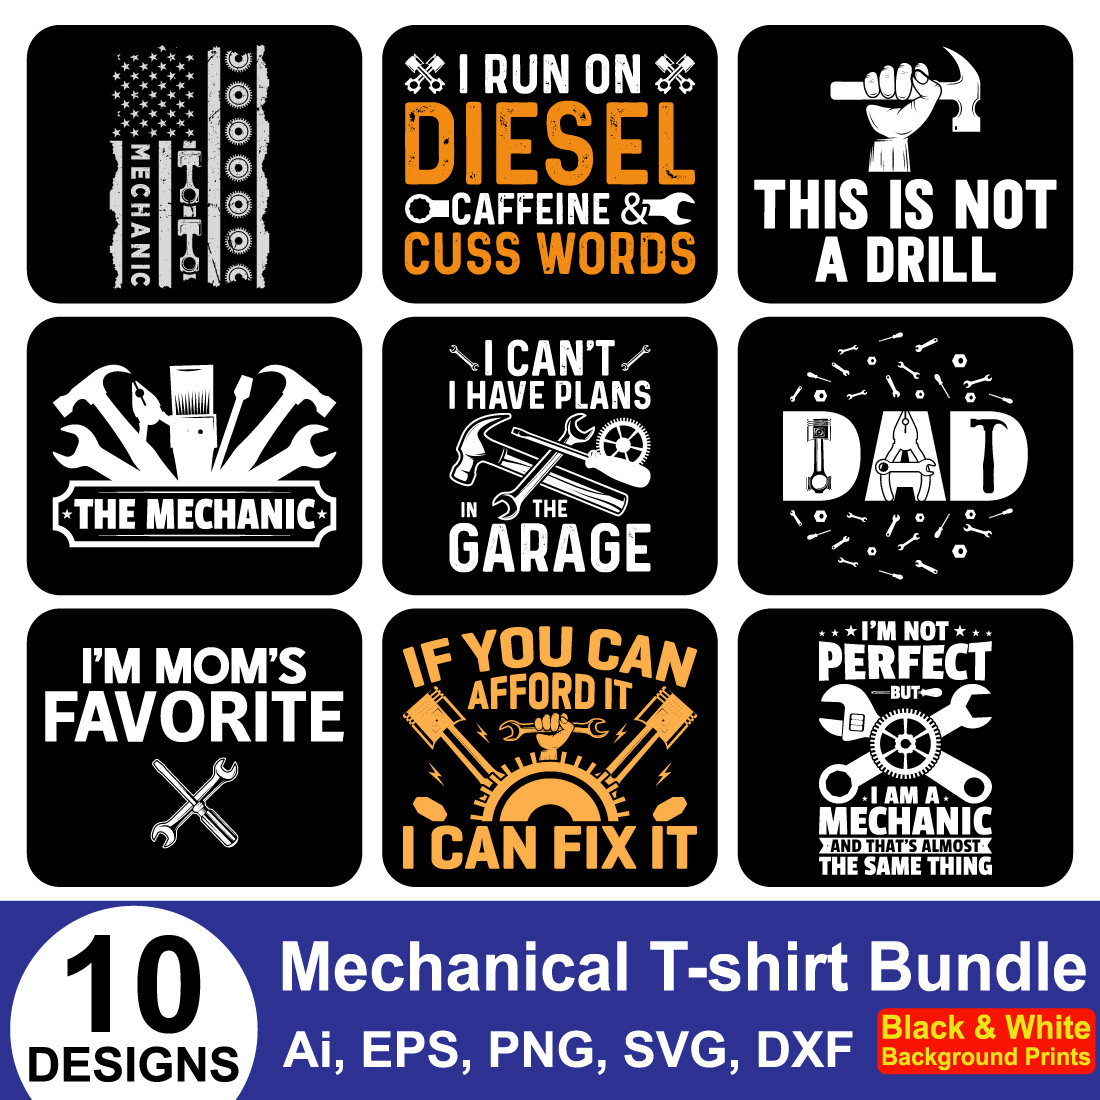 Mechanical Engineering T-shirt Design main cover.